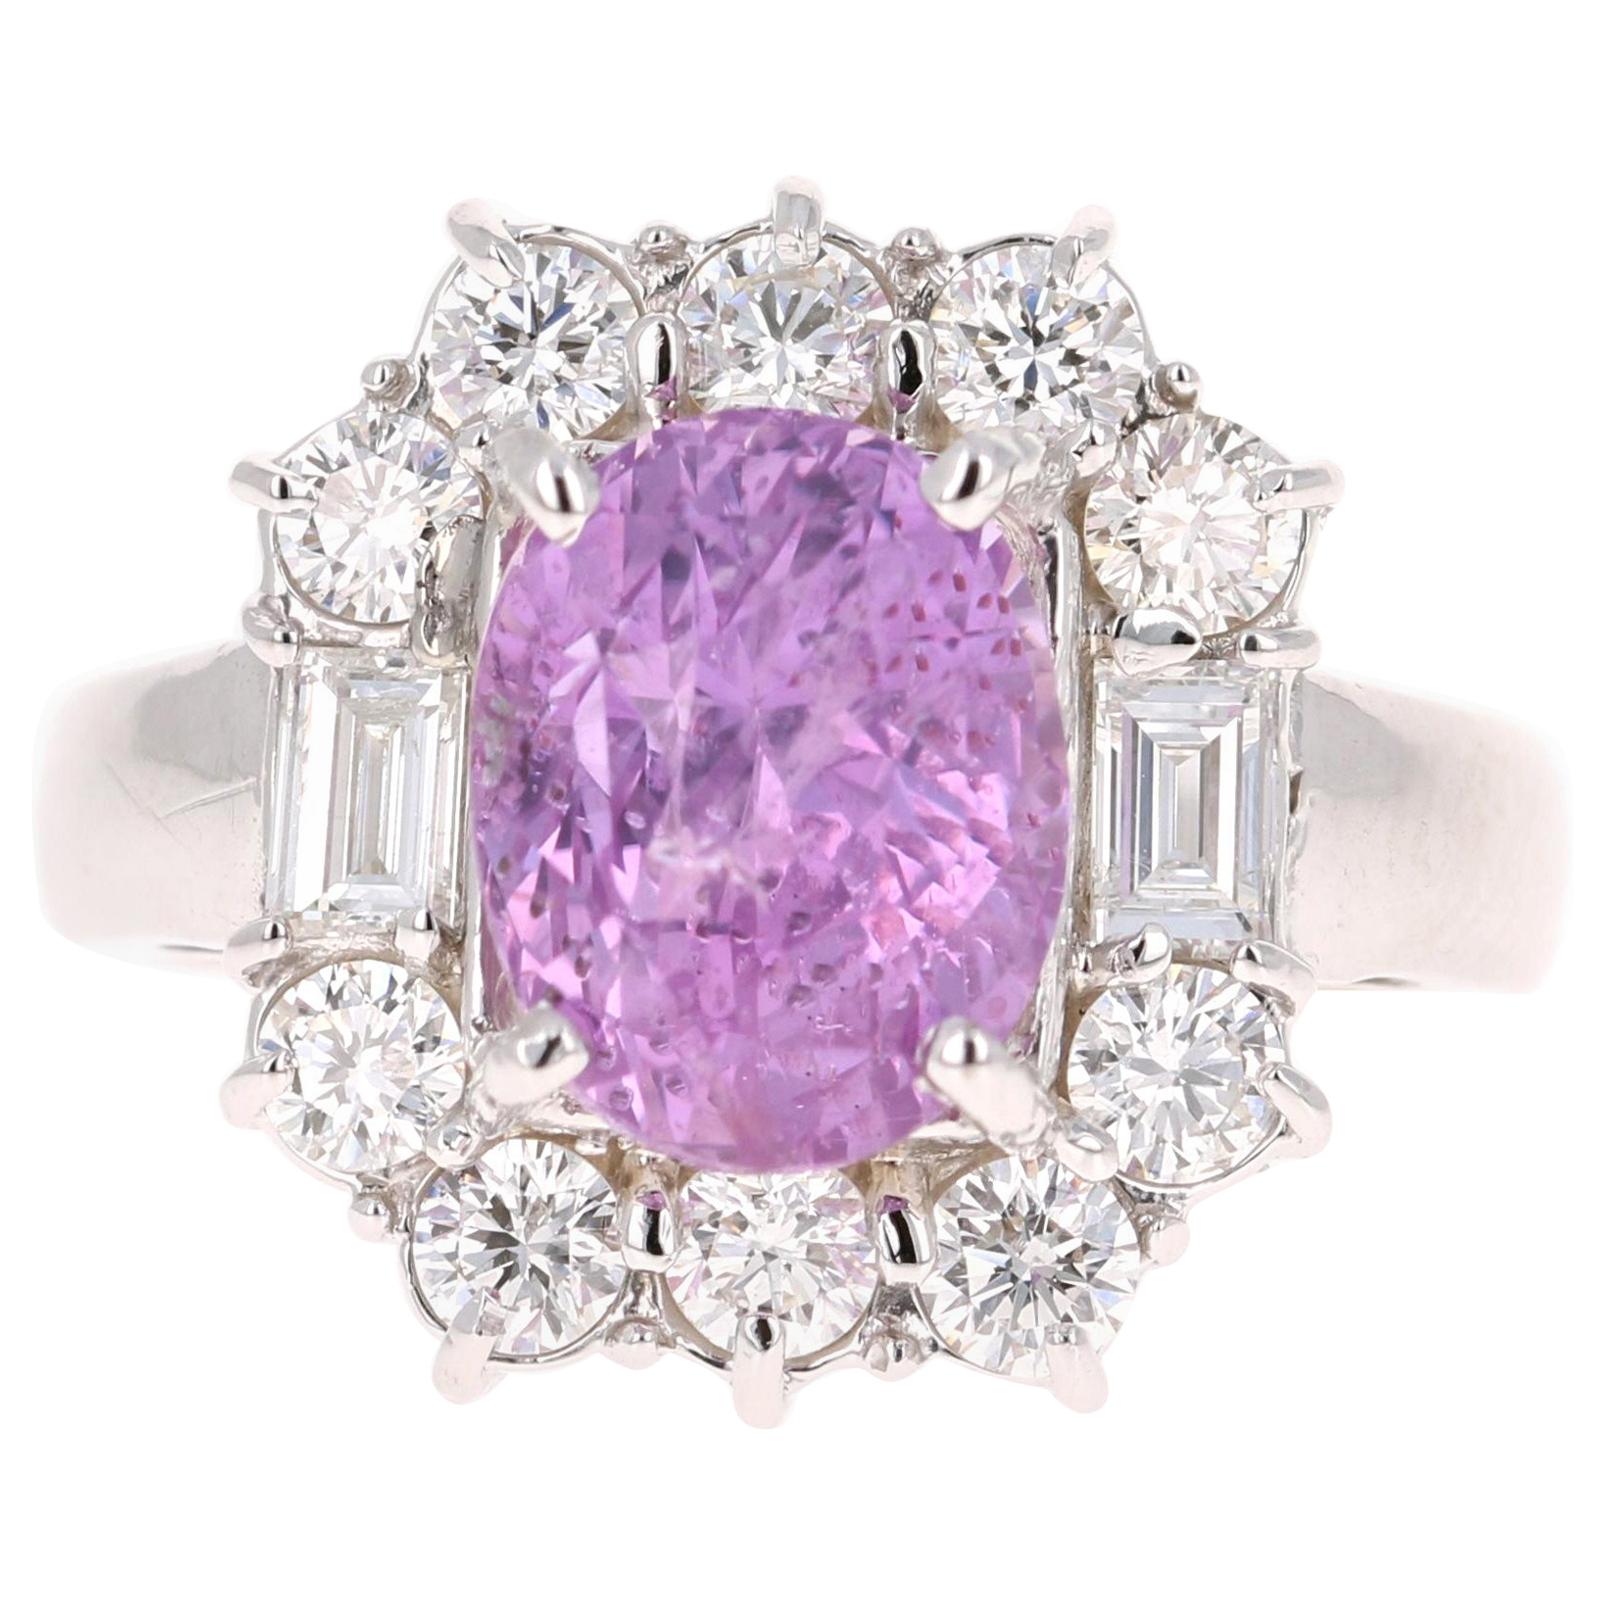 4.61 Carat Unheated Pink Sapphire Diamond 14 Karat White Gold Ring GIA Certified